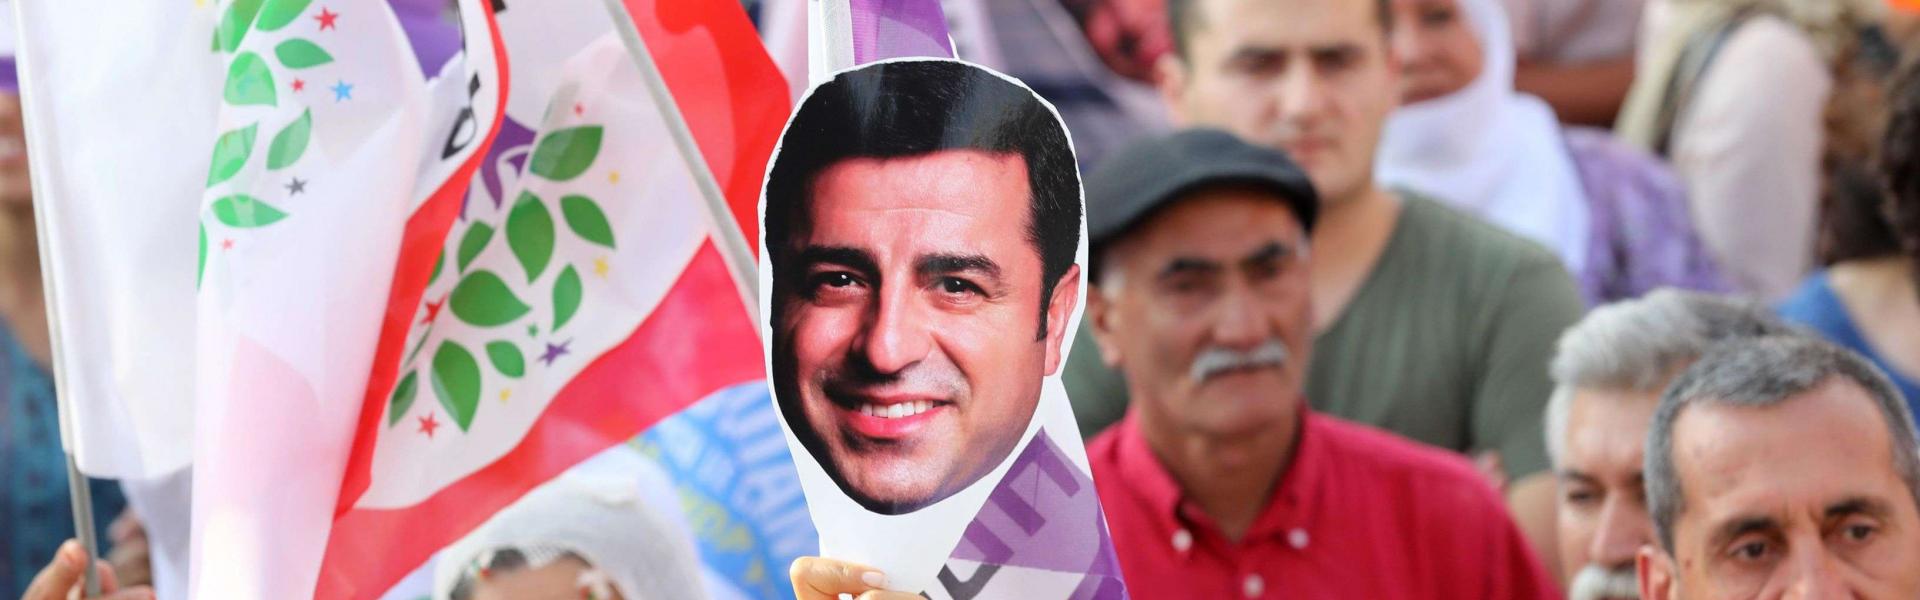 Jailed lawmaker Demirtaş says pro-Kurdish HDP played key role in AKP upset at polls 6